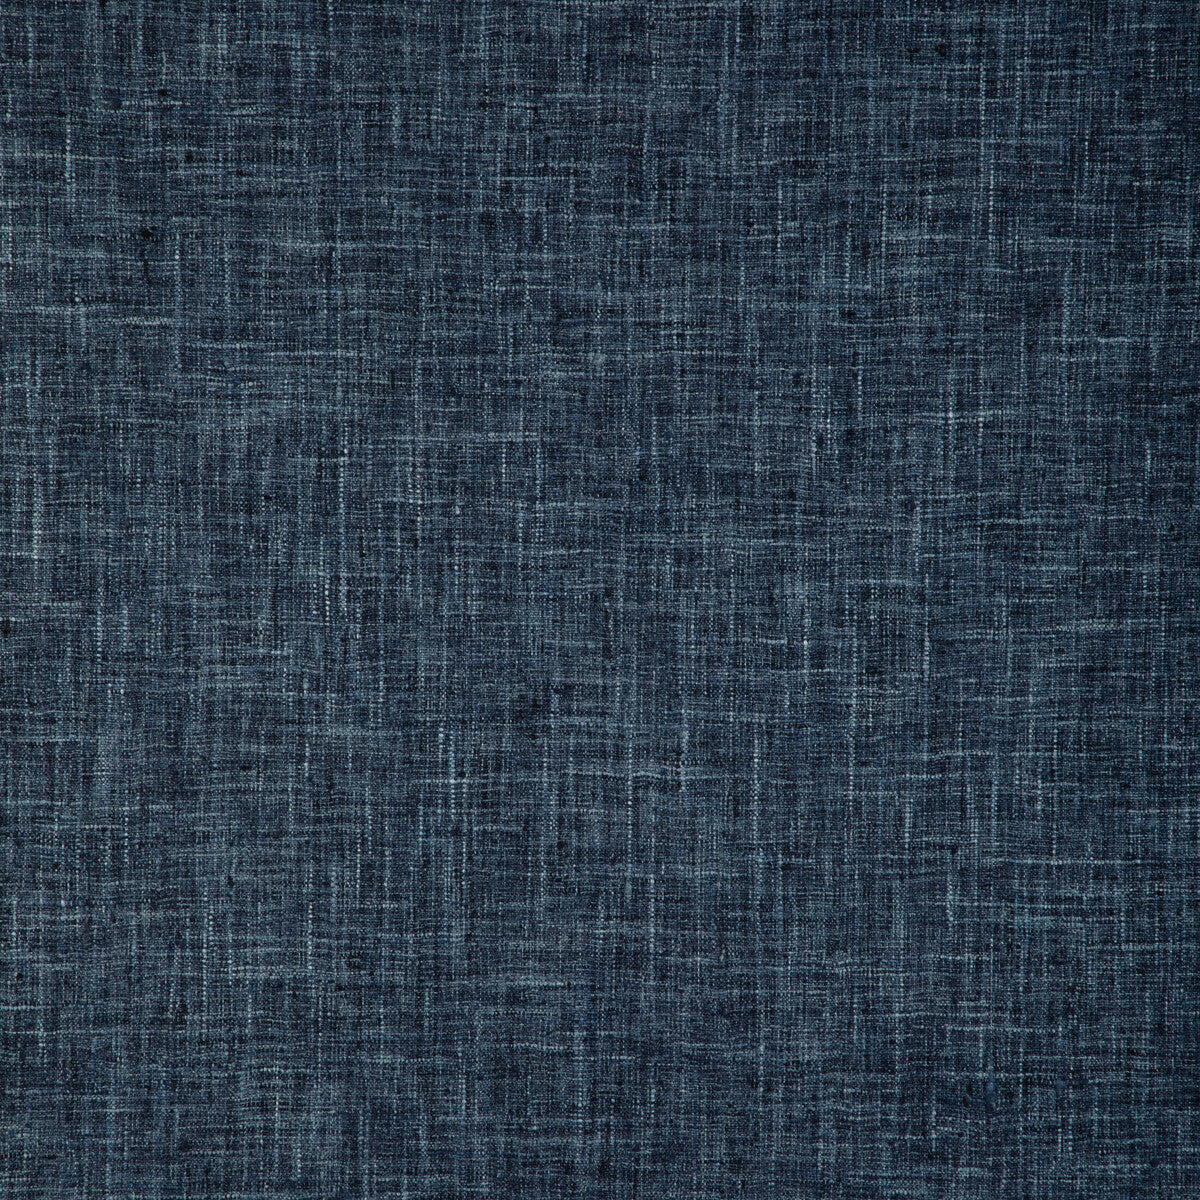 Kravet Smart fabric in 34983-50 color - pattern 34983.50.0 - by Kravet Smart